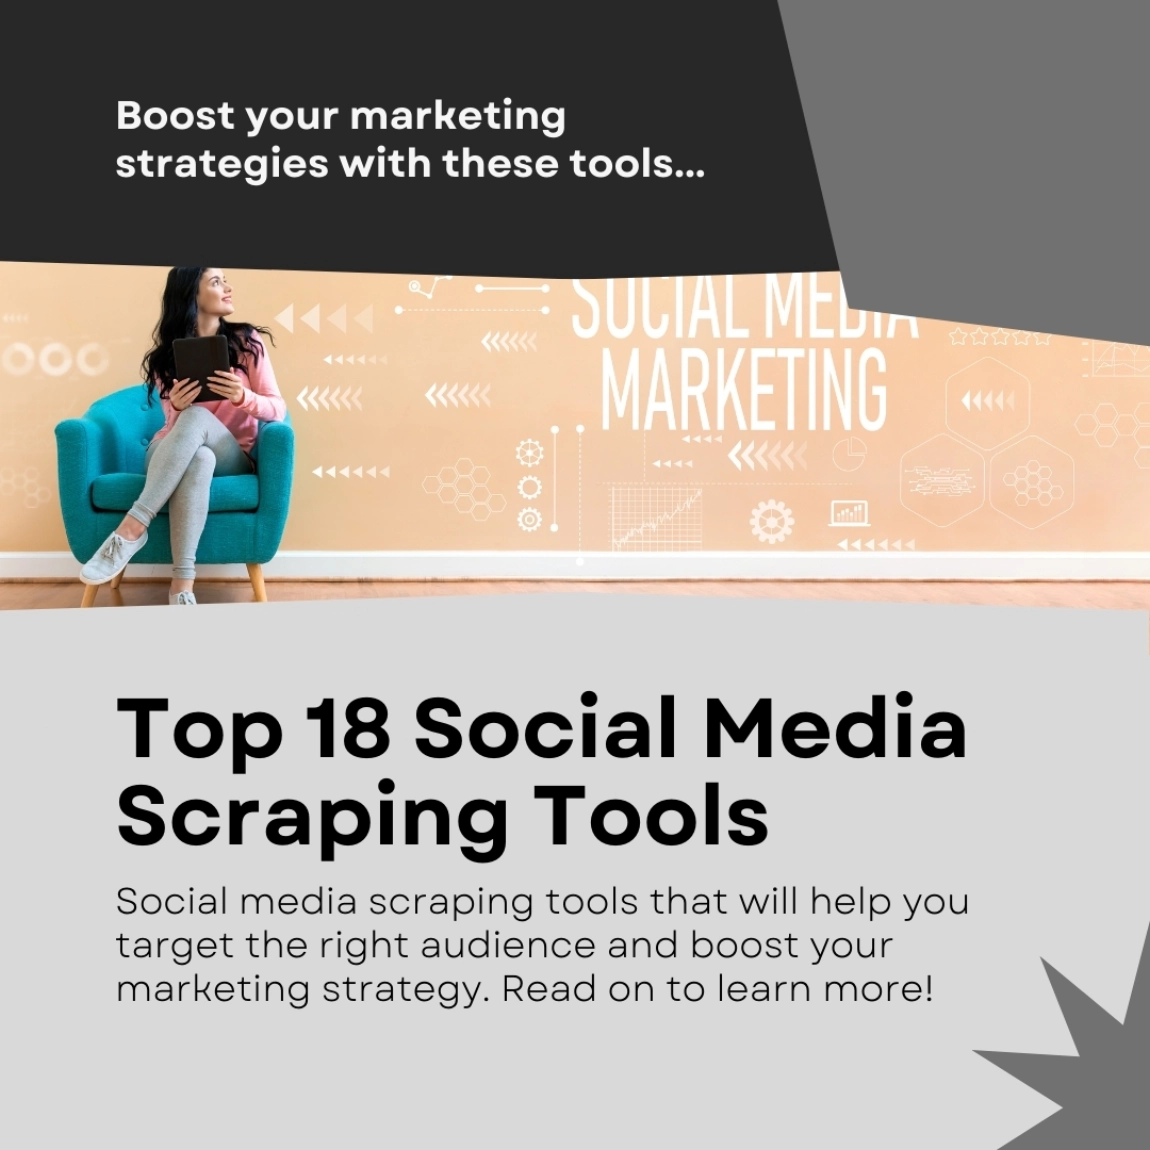 Top 18 Social Media Scraping Tools for Marketing Mastery